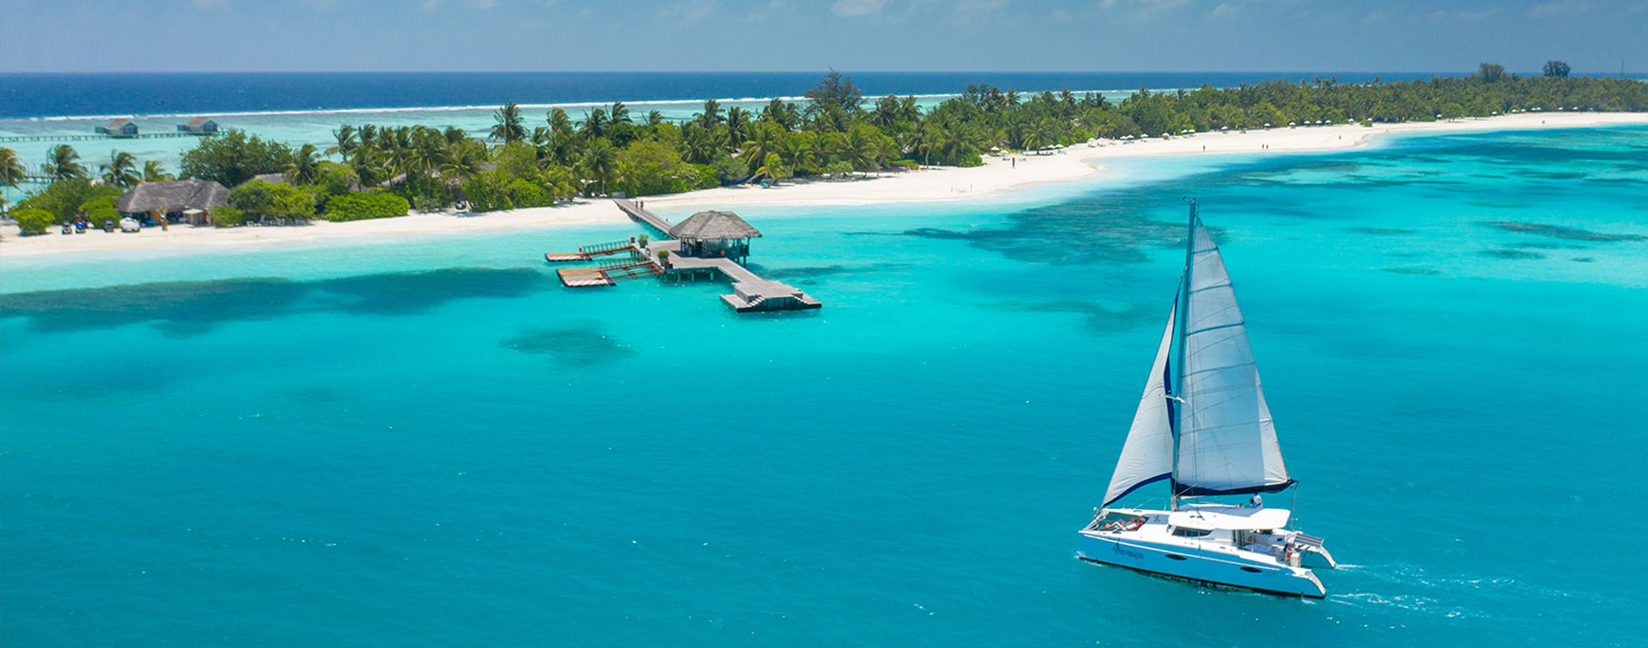 Luxury Maldives resorts